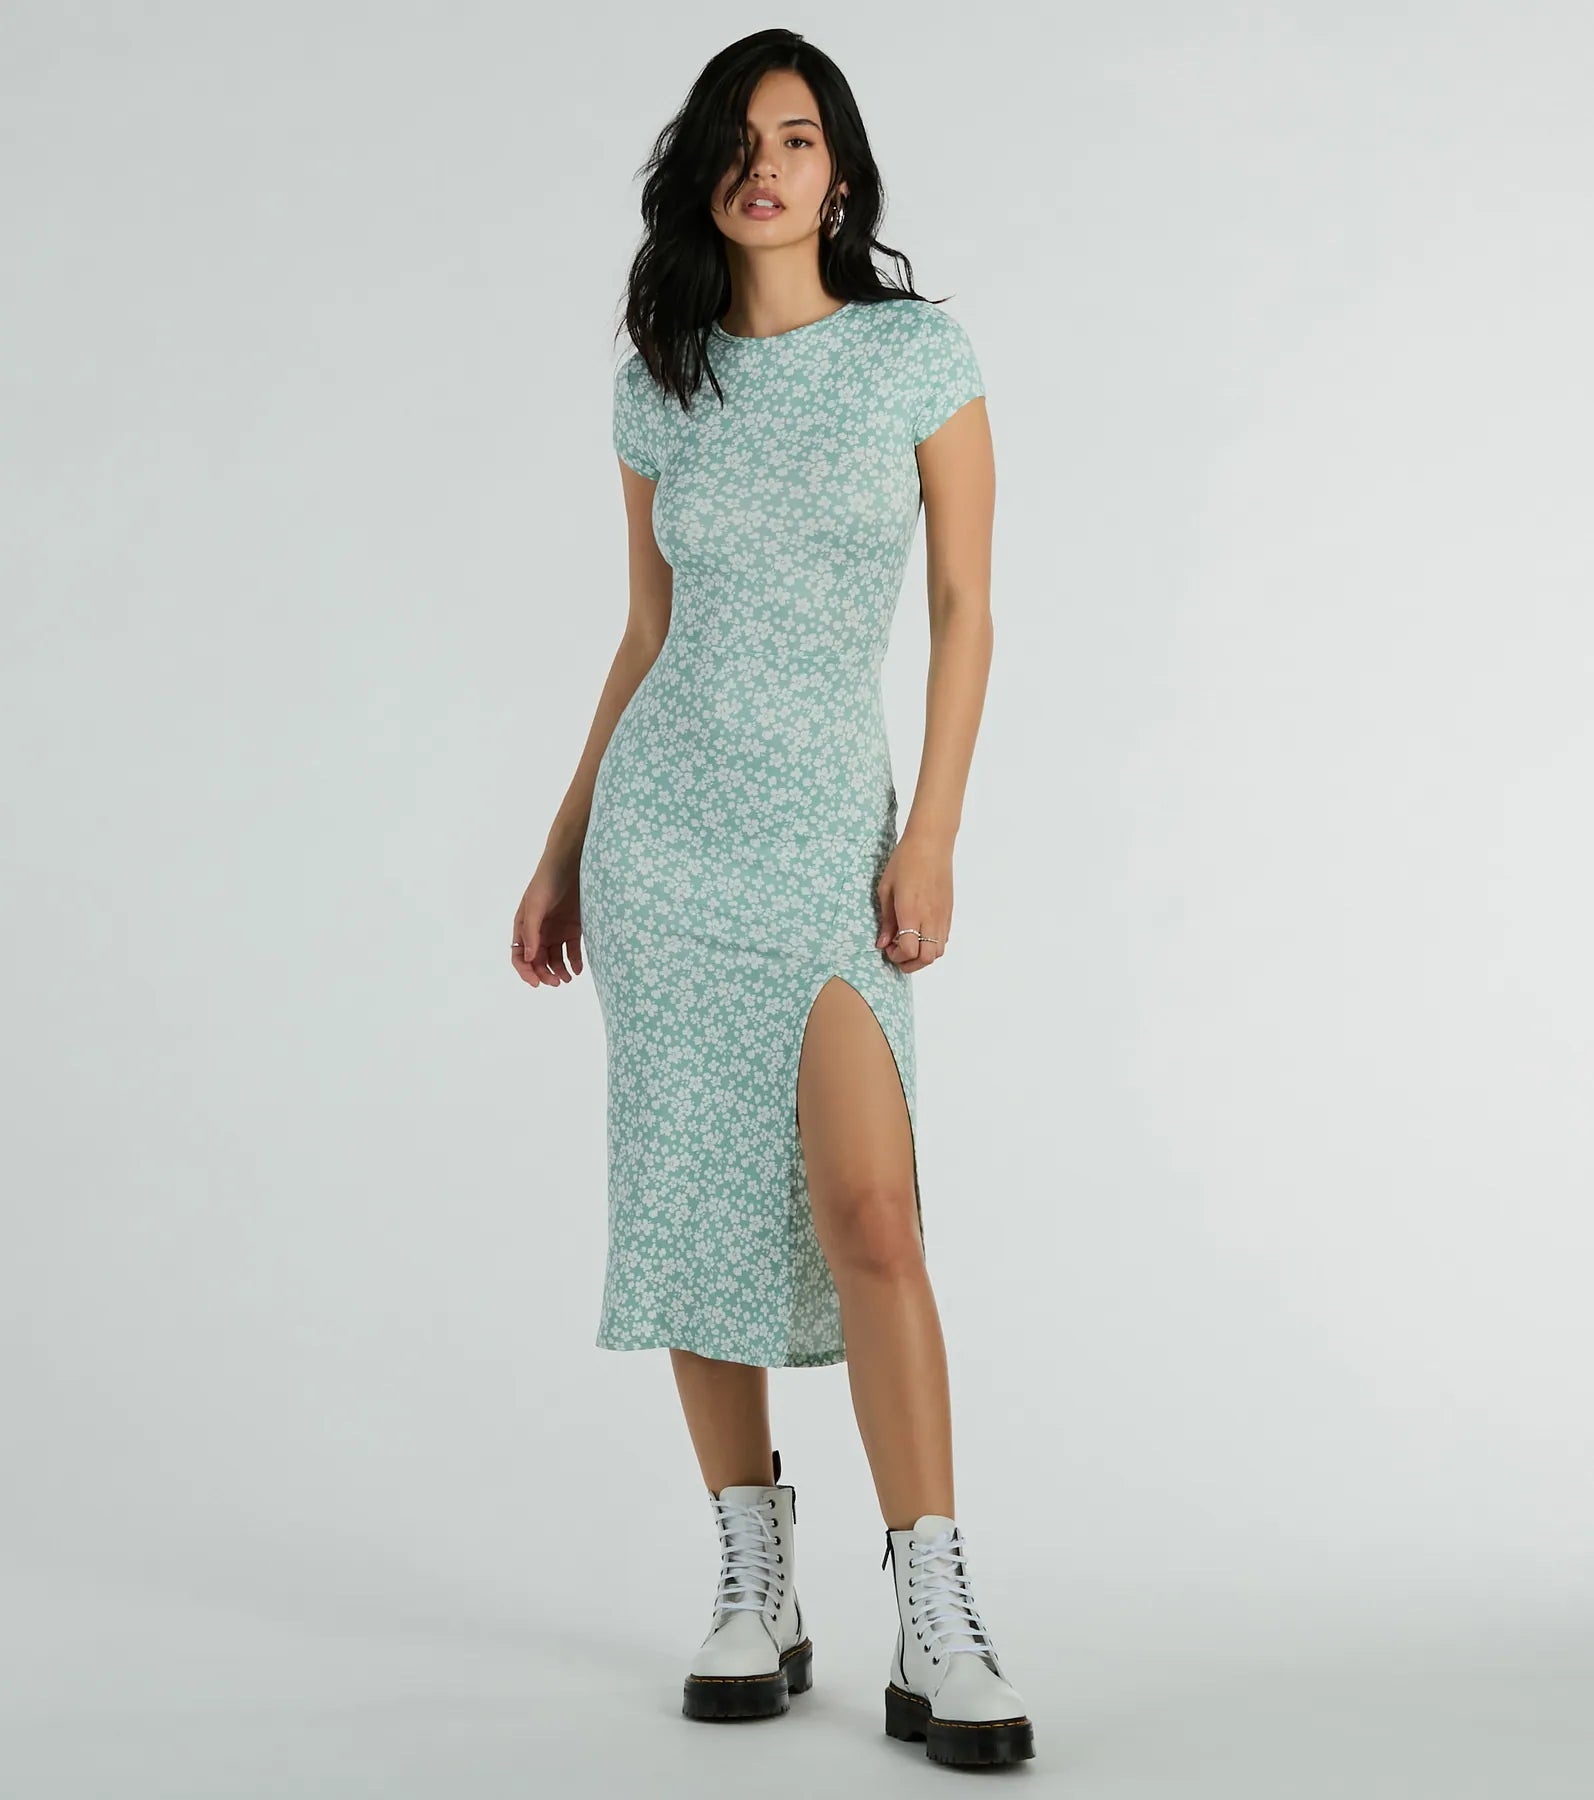 Spring Floral Print Knit Short Sleeves Sleeves Crew Neck Cutout Stretchy Slit Bodycon Dress/Midi Dress